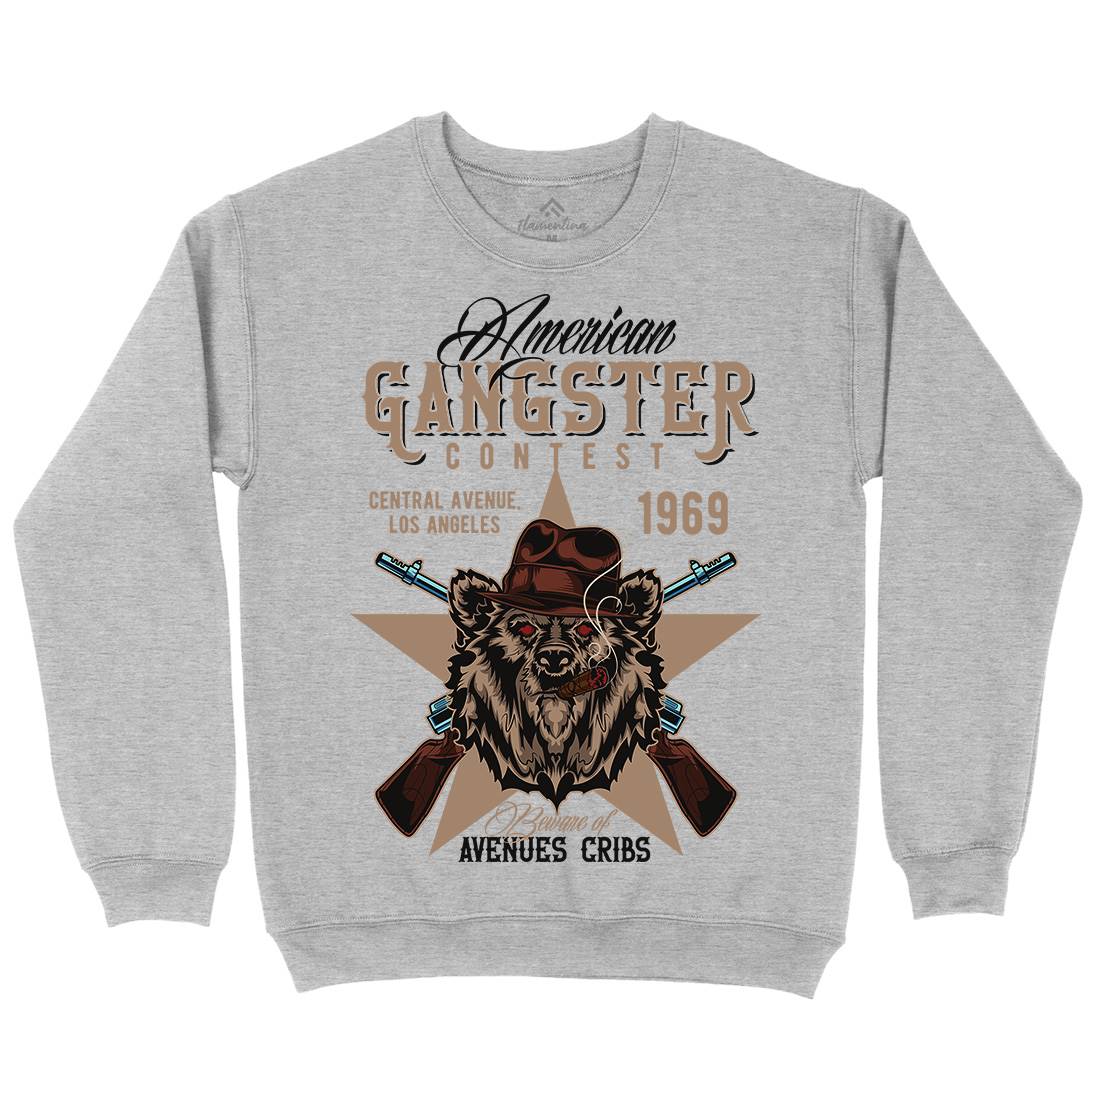 Gangster Mens Crew Neck Sweatshirt American B128